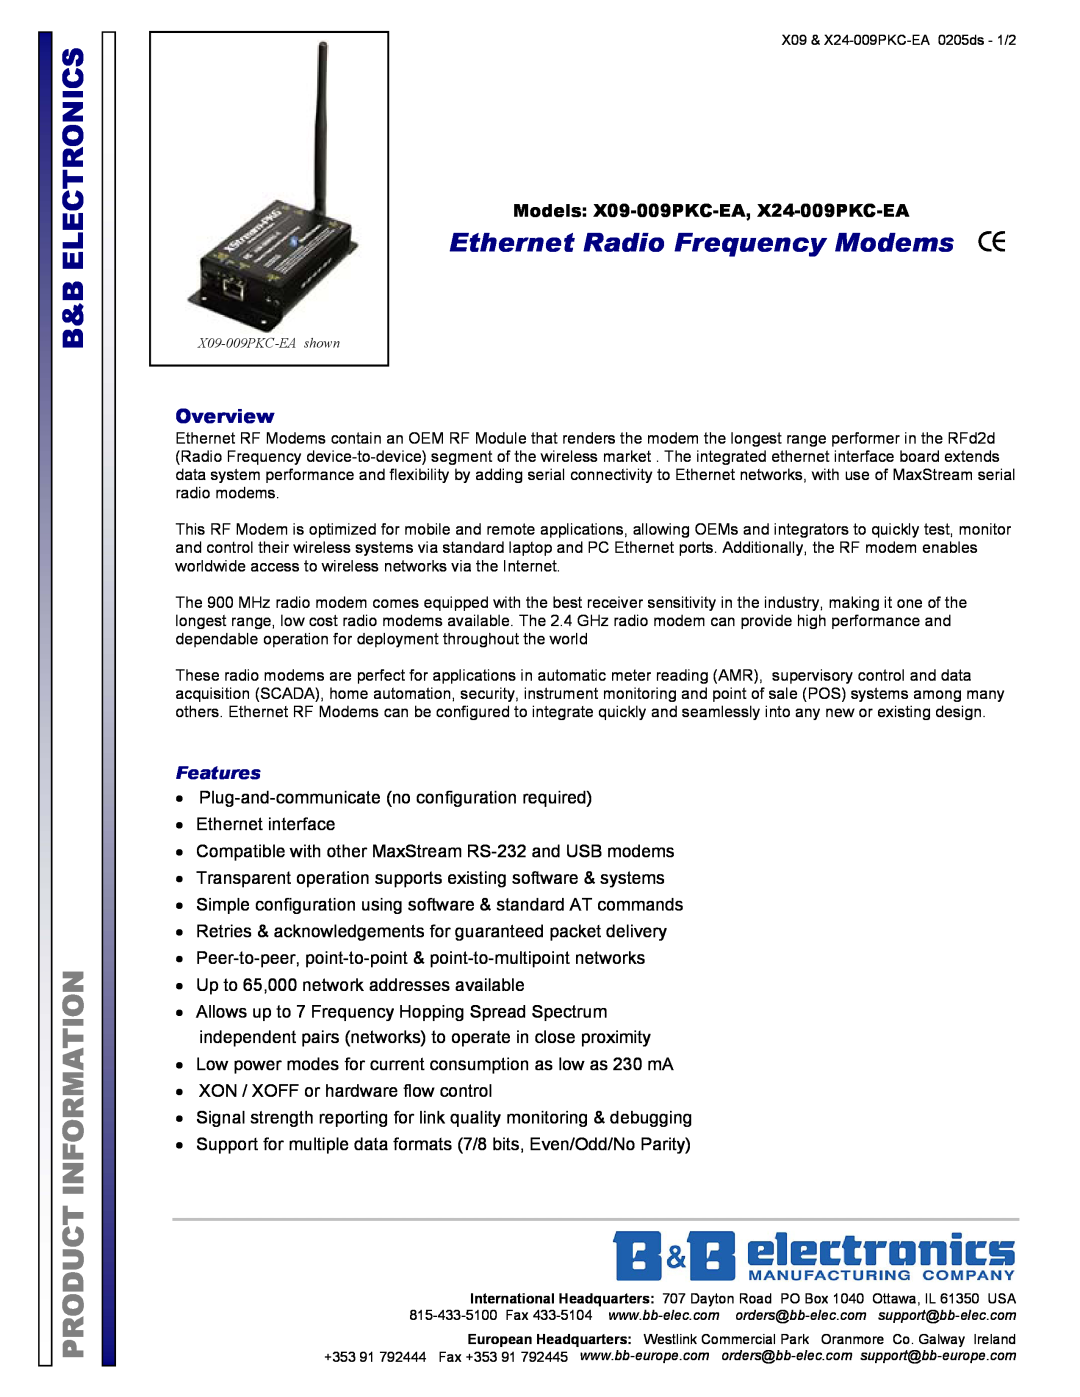 B&B Electronics manual B&B Electronics, Product Information, Models X09-009PKC-EA, X24-009PKC-EA, Features, Overview 